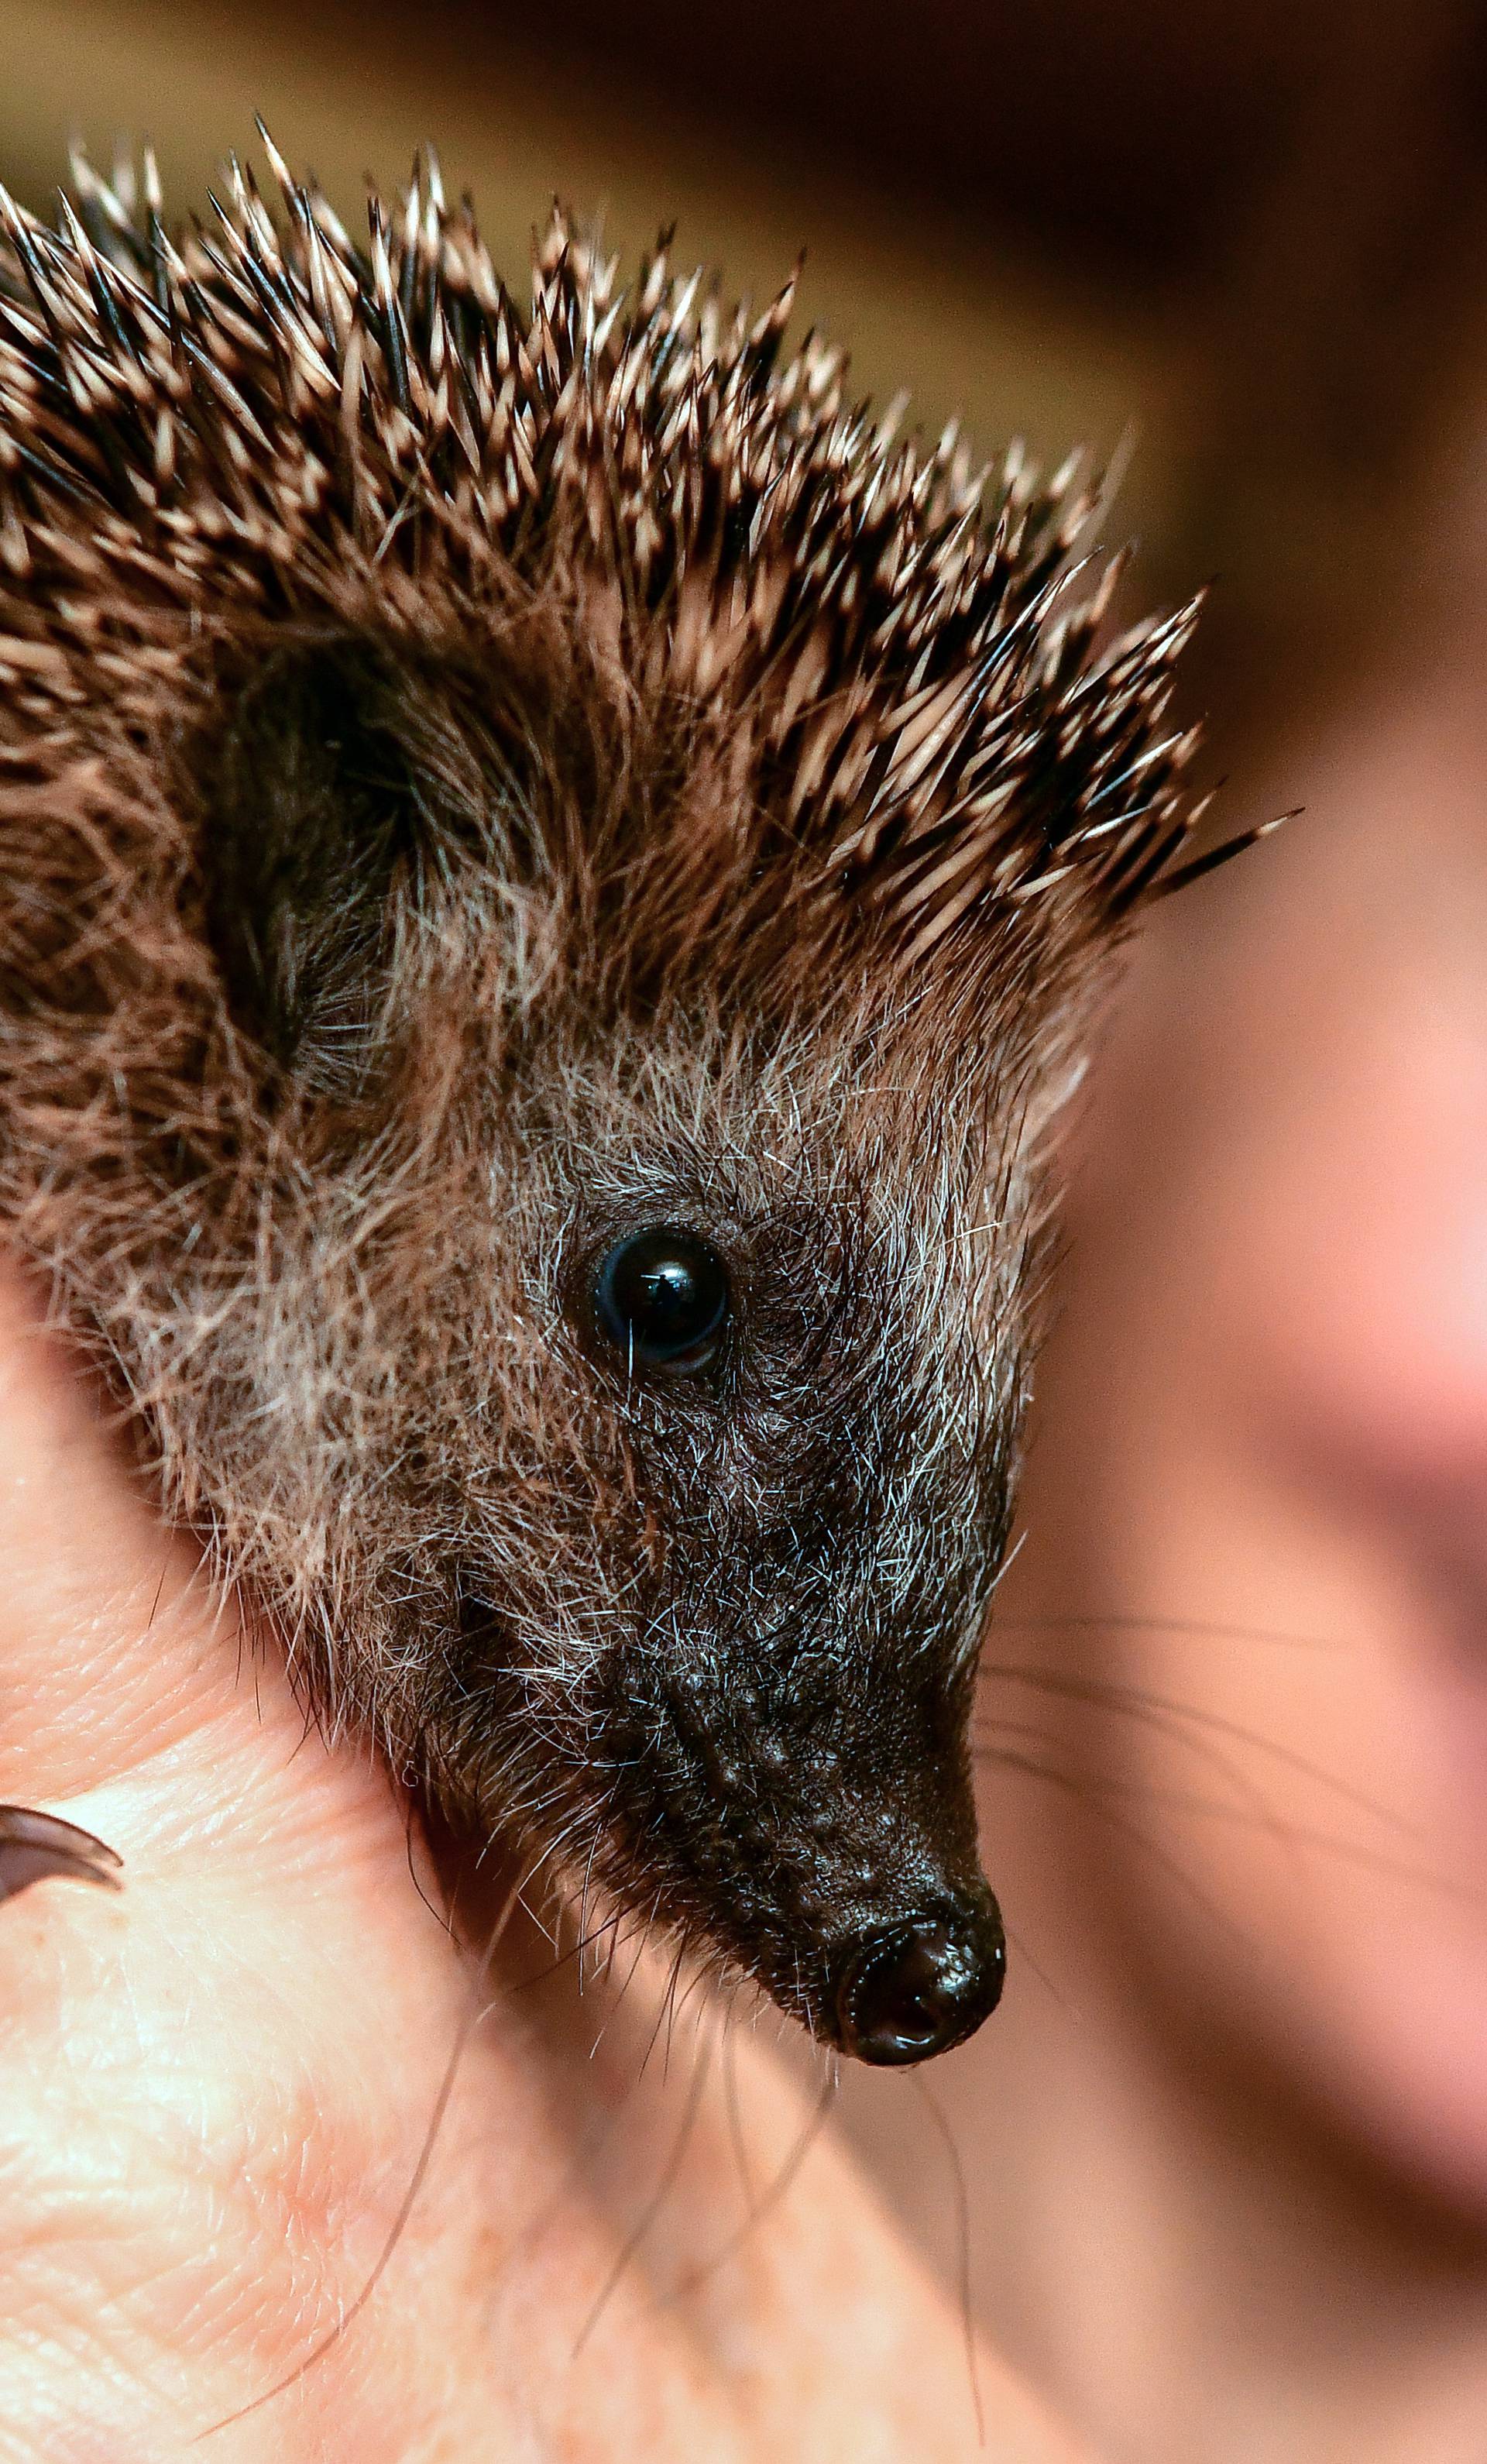 Hedgehog station helps with hibernation